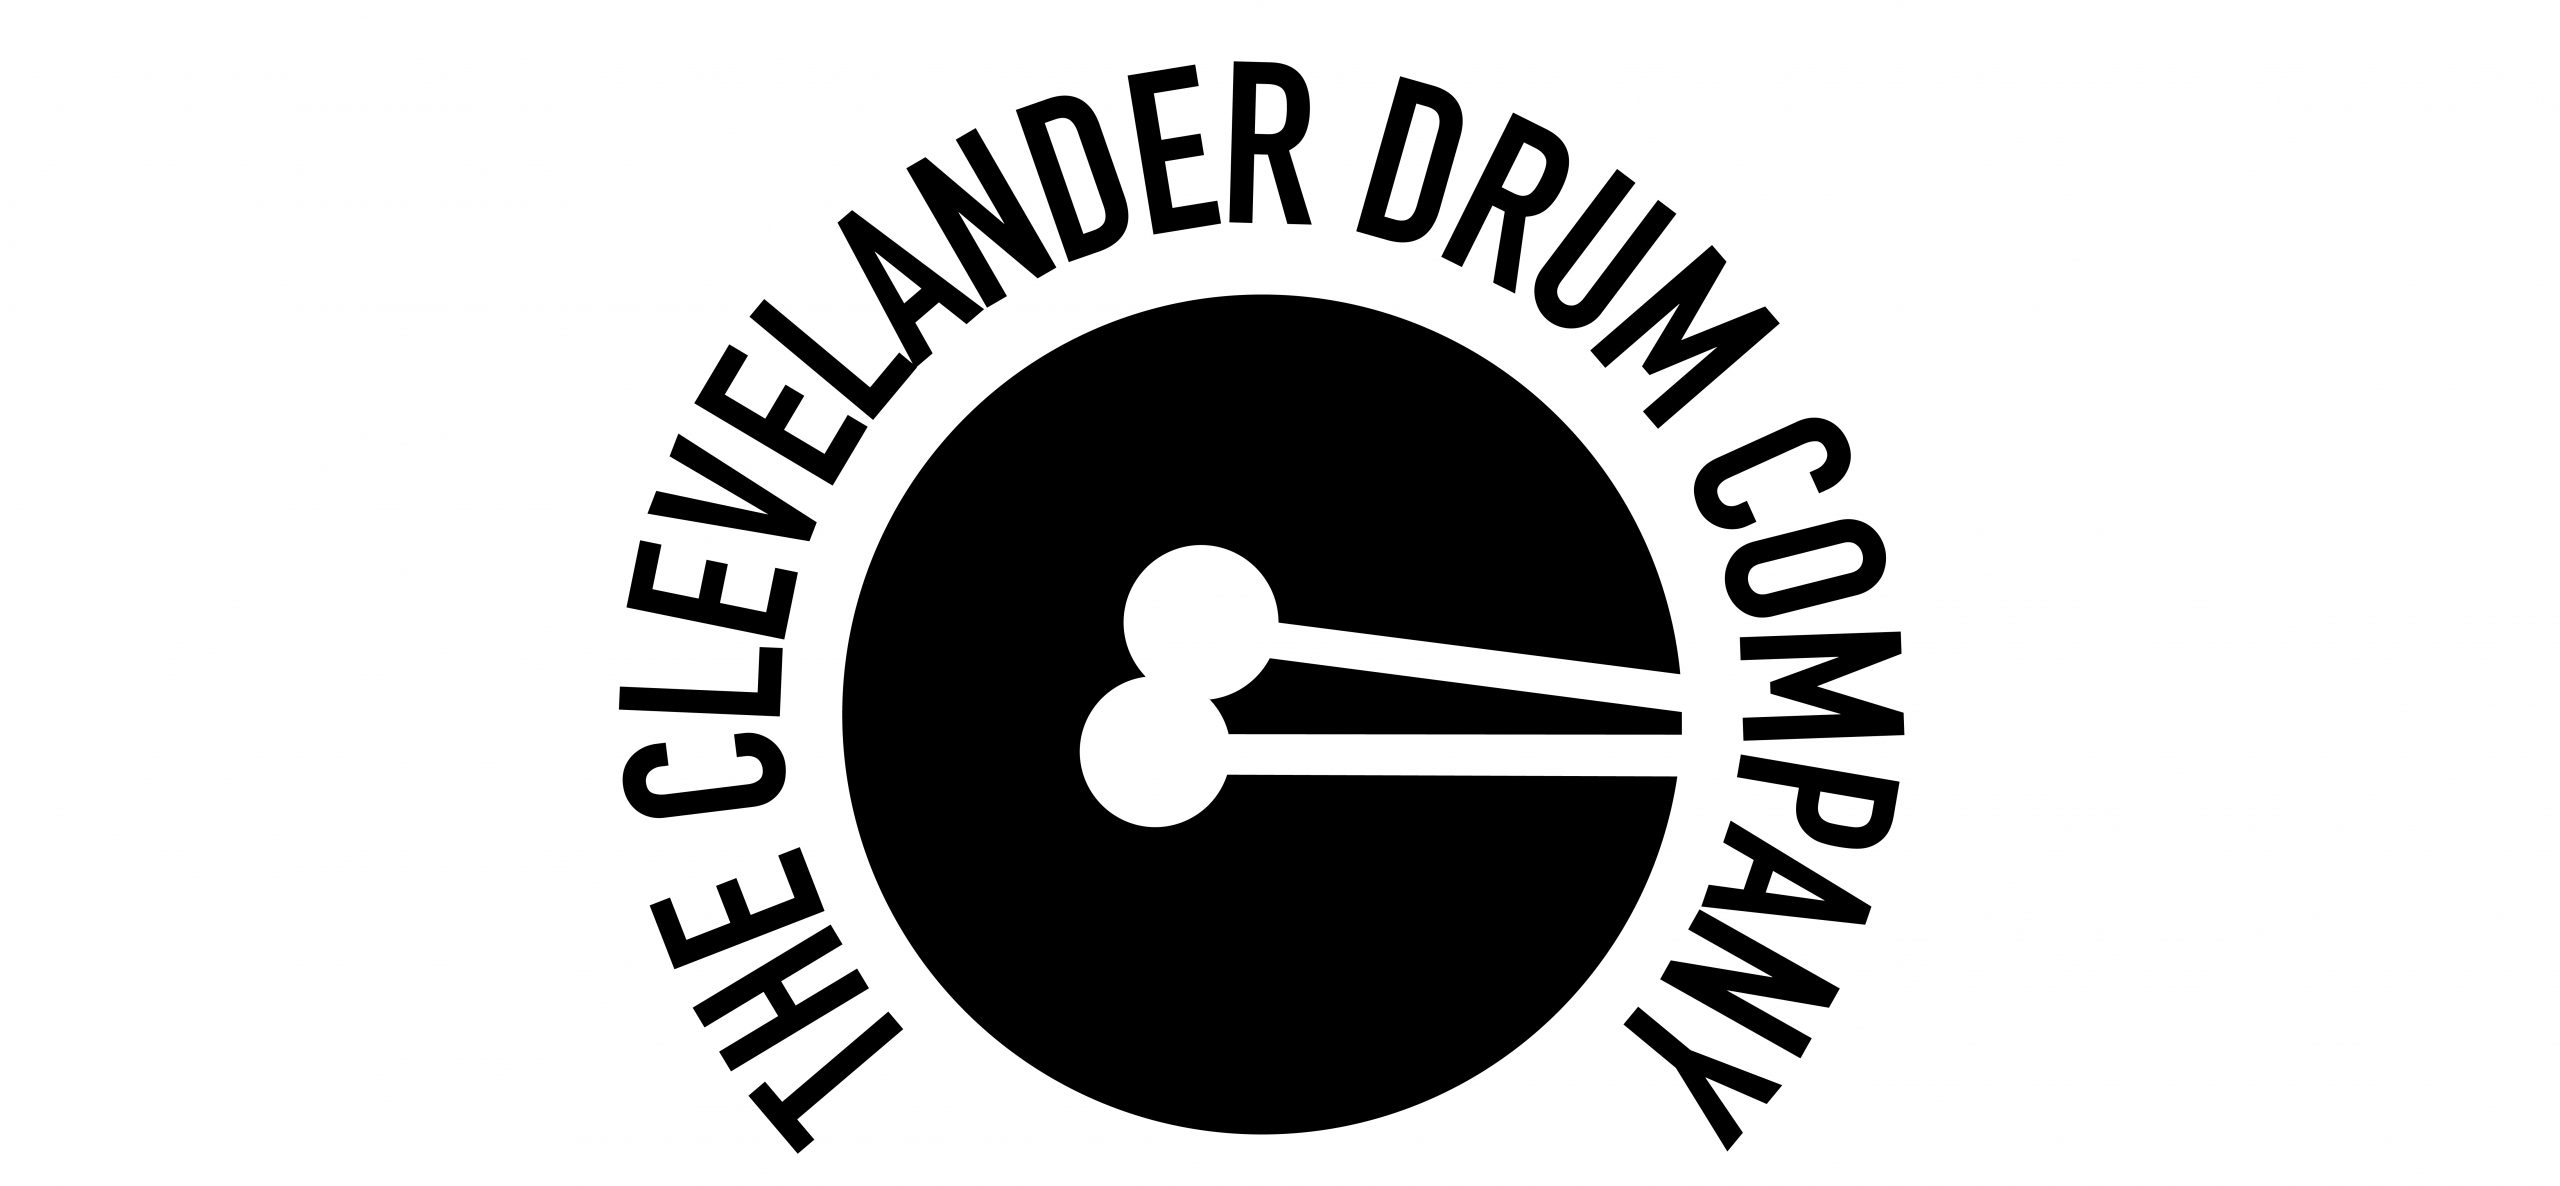 Clevelander Drum Co.